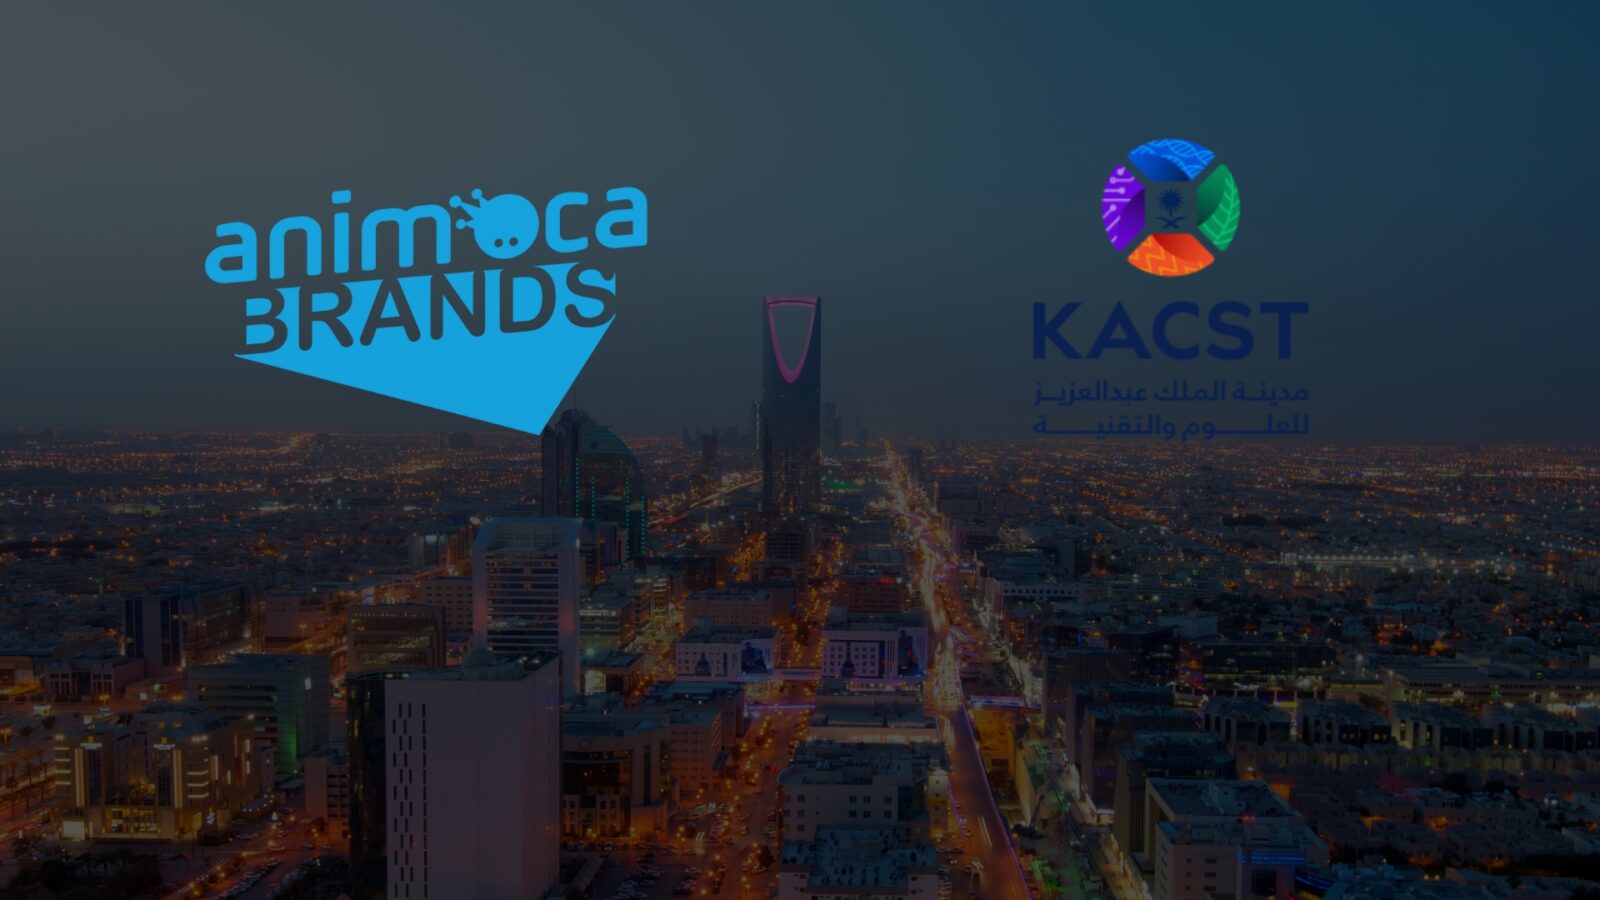 Animoca Brands Partners with KACST to Launch Groundbreaking Web3 Hub in Saudi Arabia